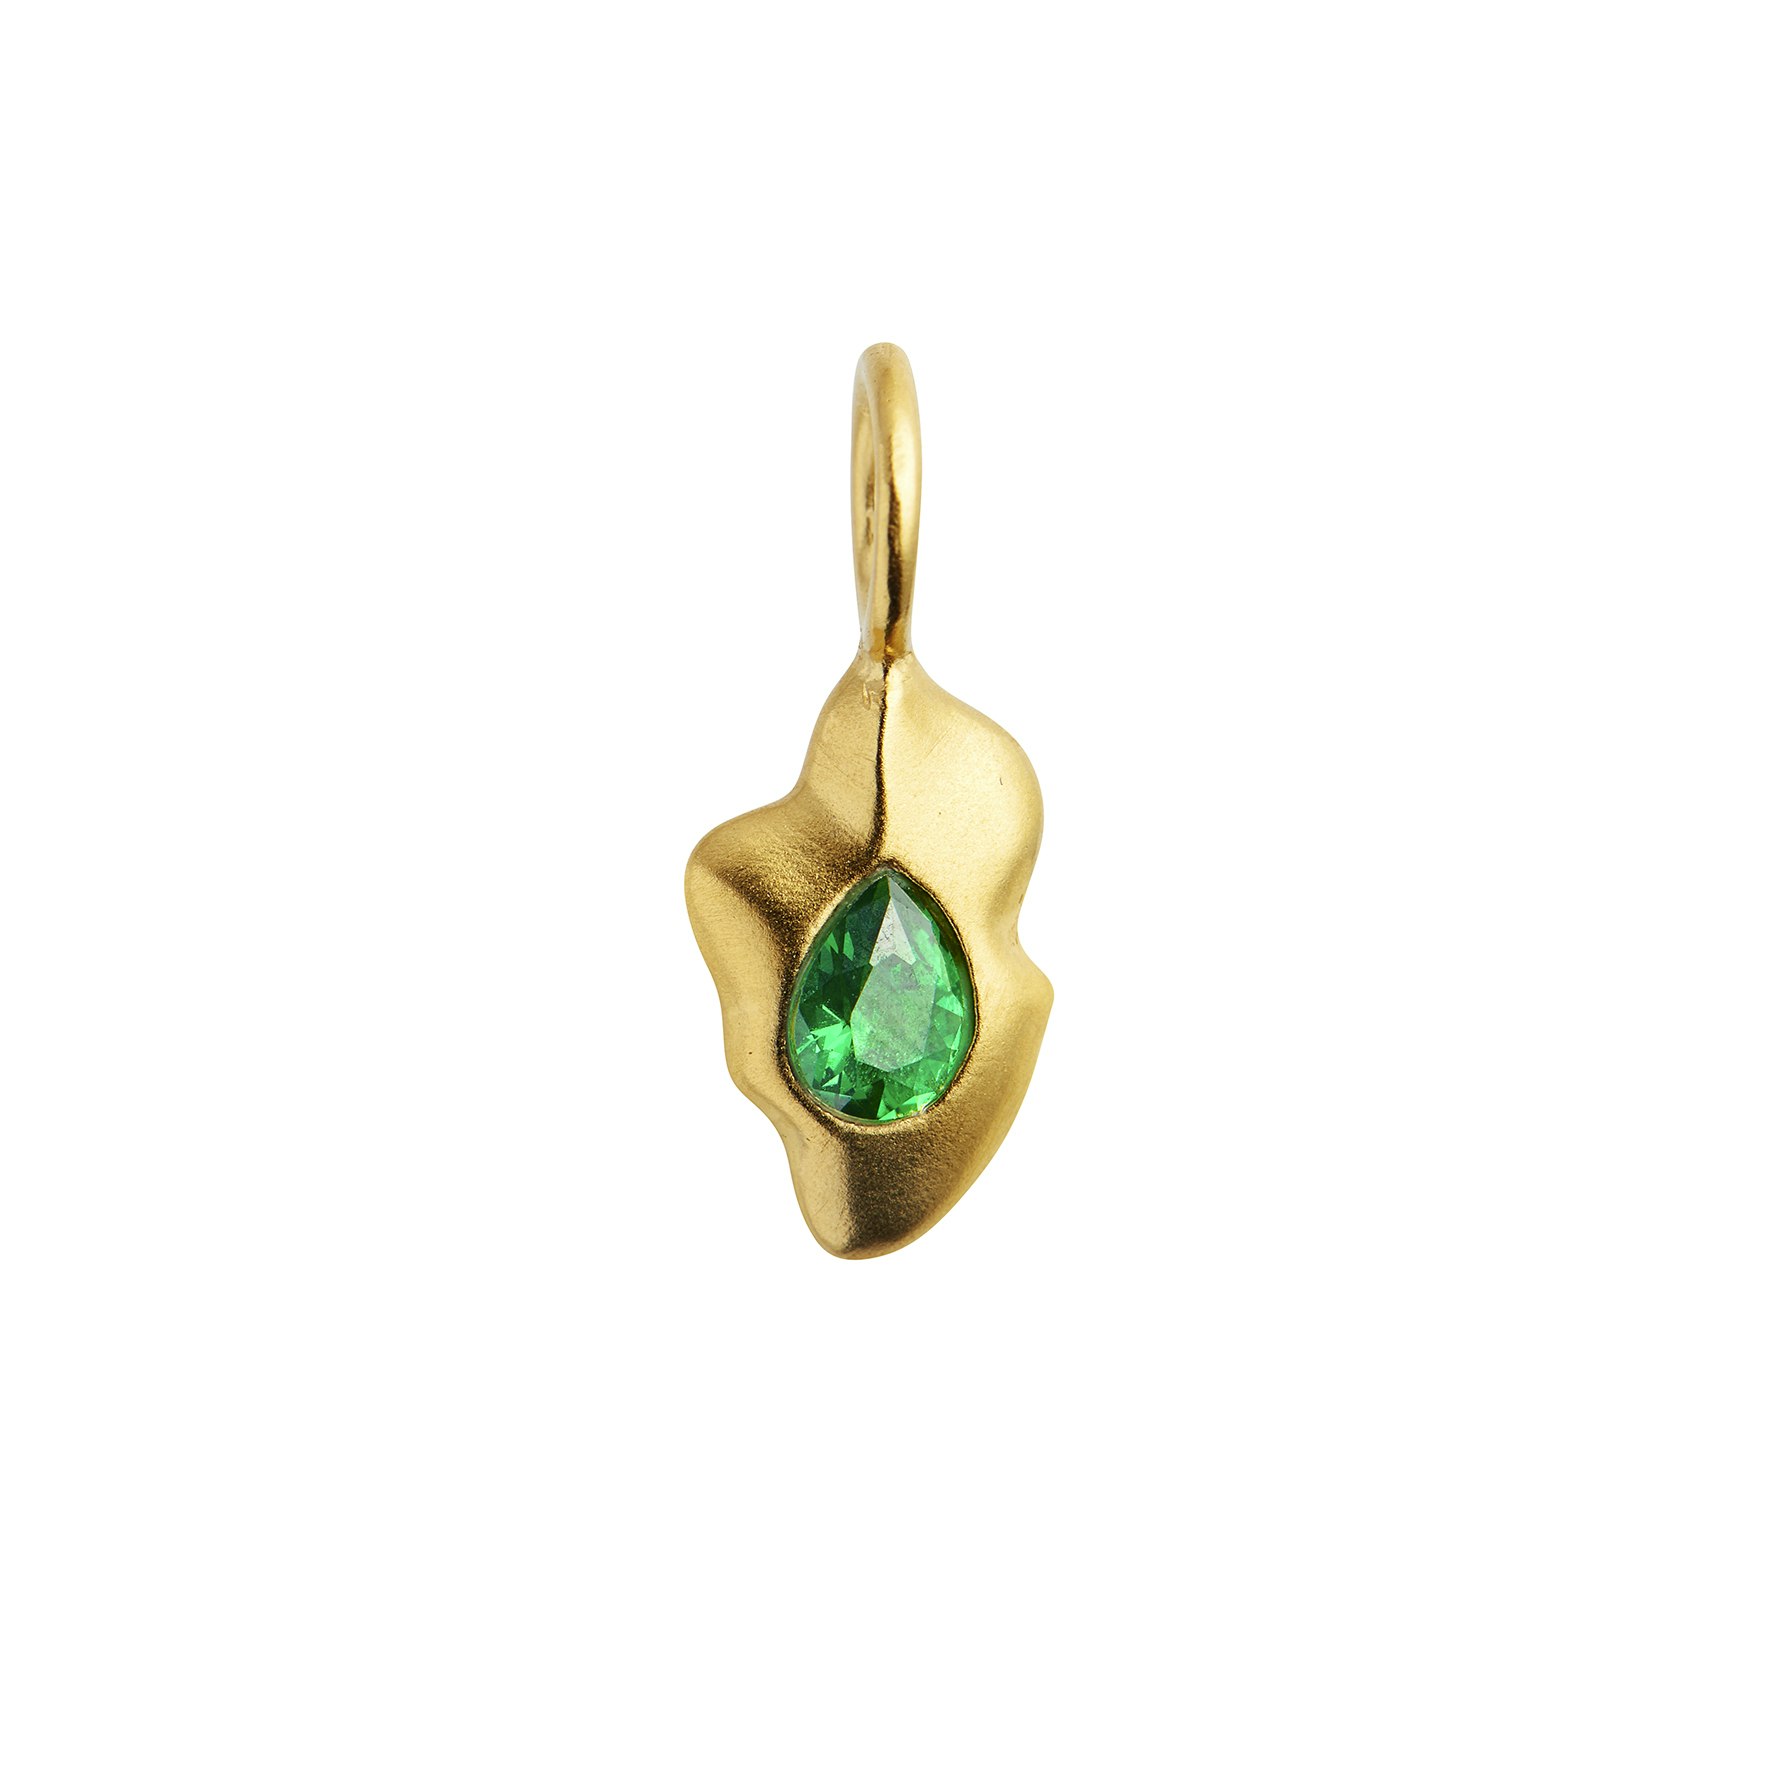 Glimpse Pendant With Green Stone von STINE A Jewelry in Vergoldet-Silber Sterling 925